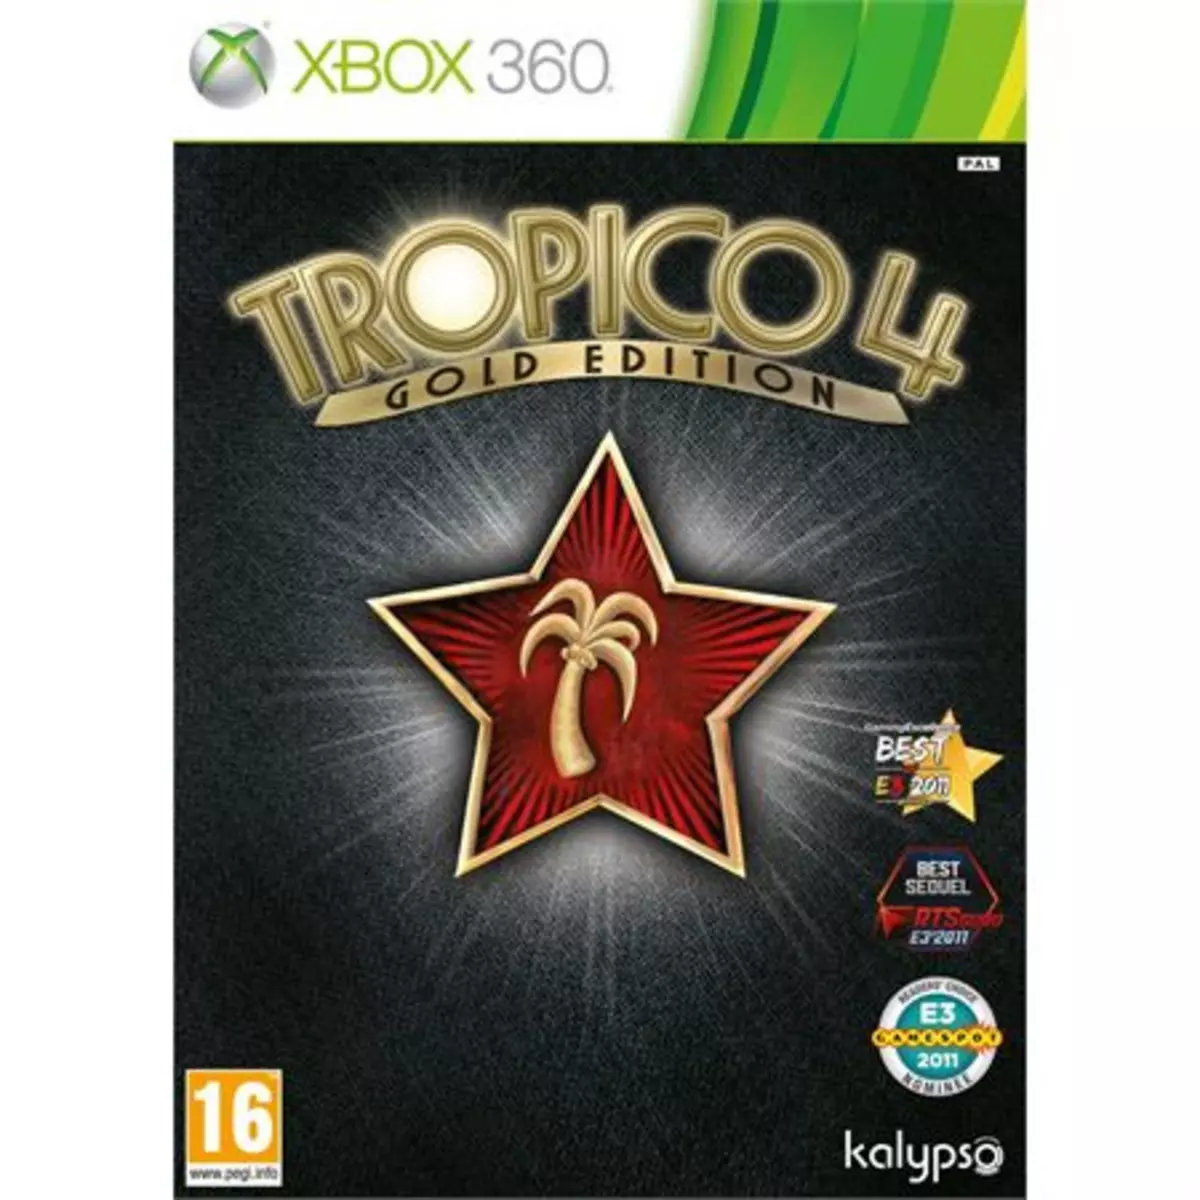 Tropico 4 Gold Edition